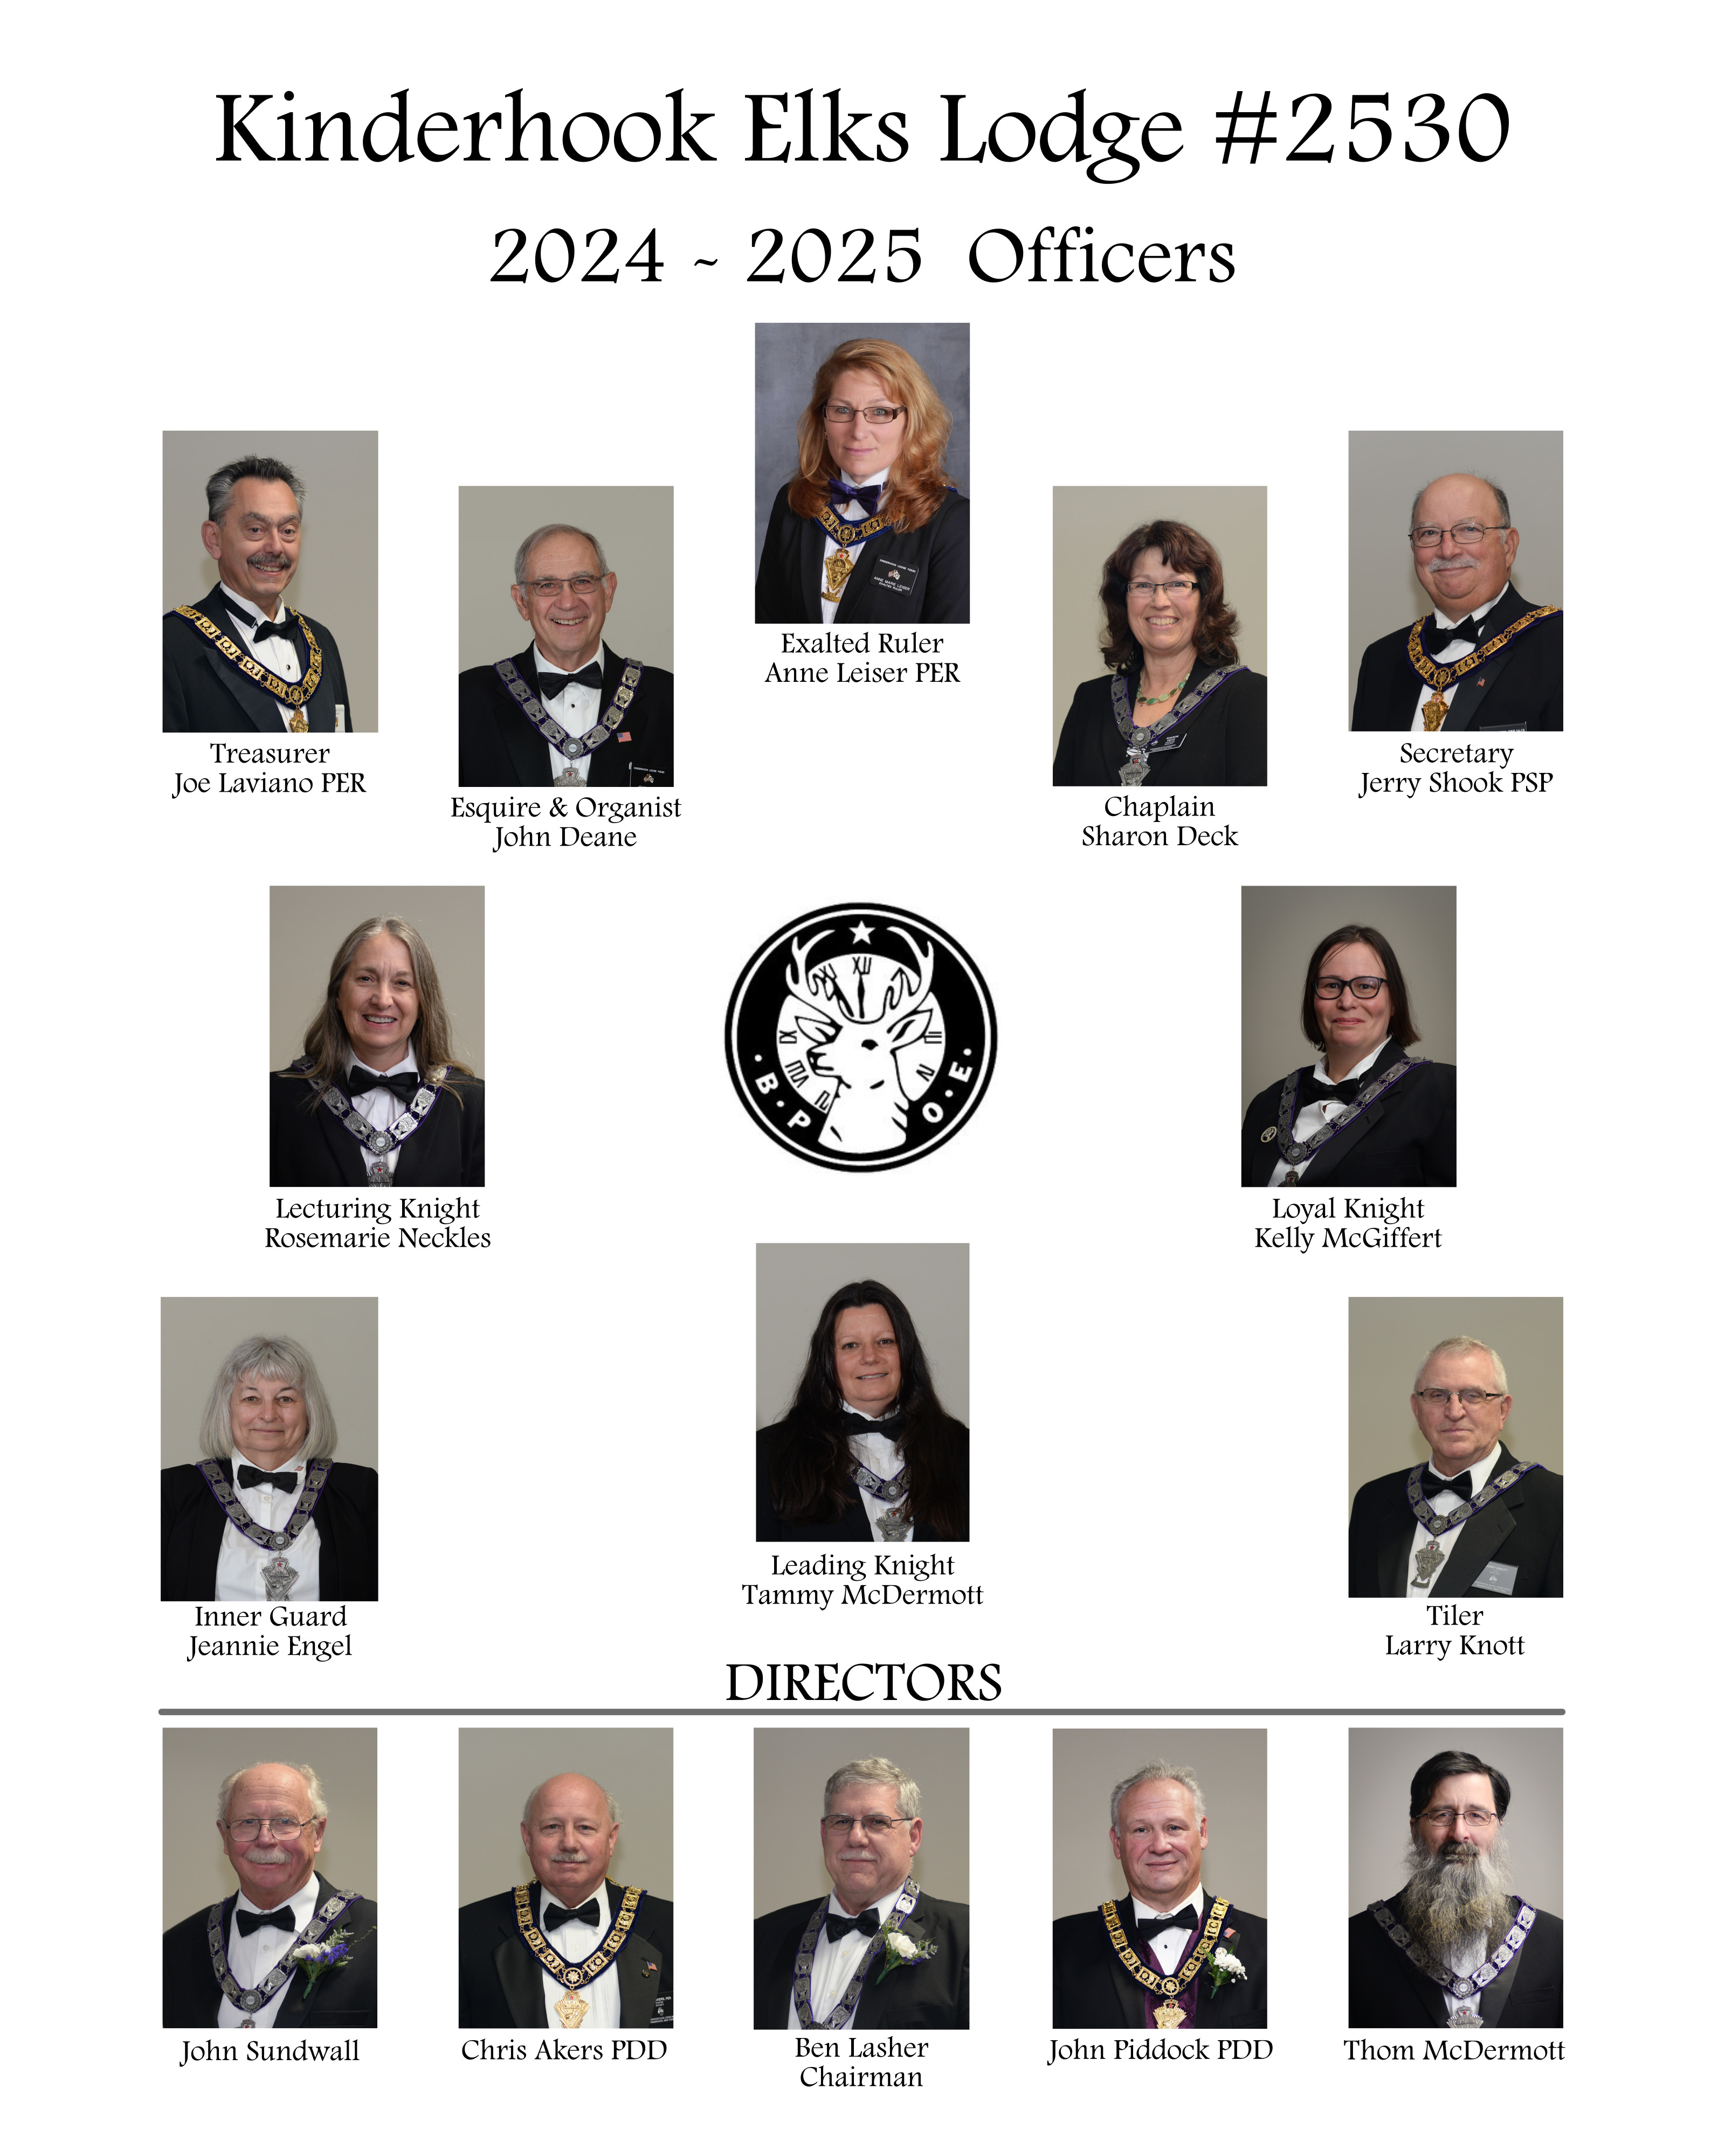 Kinderhook Elks Lodge Officers 2024